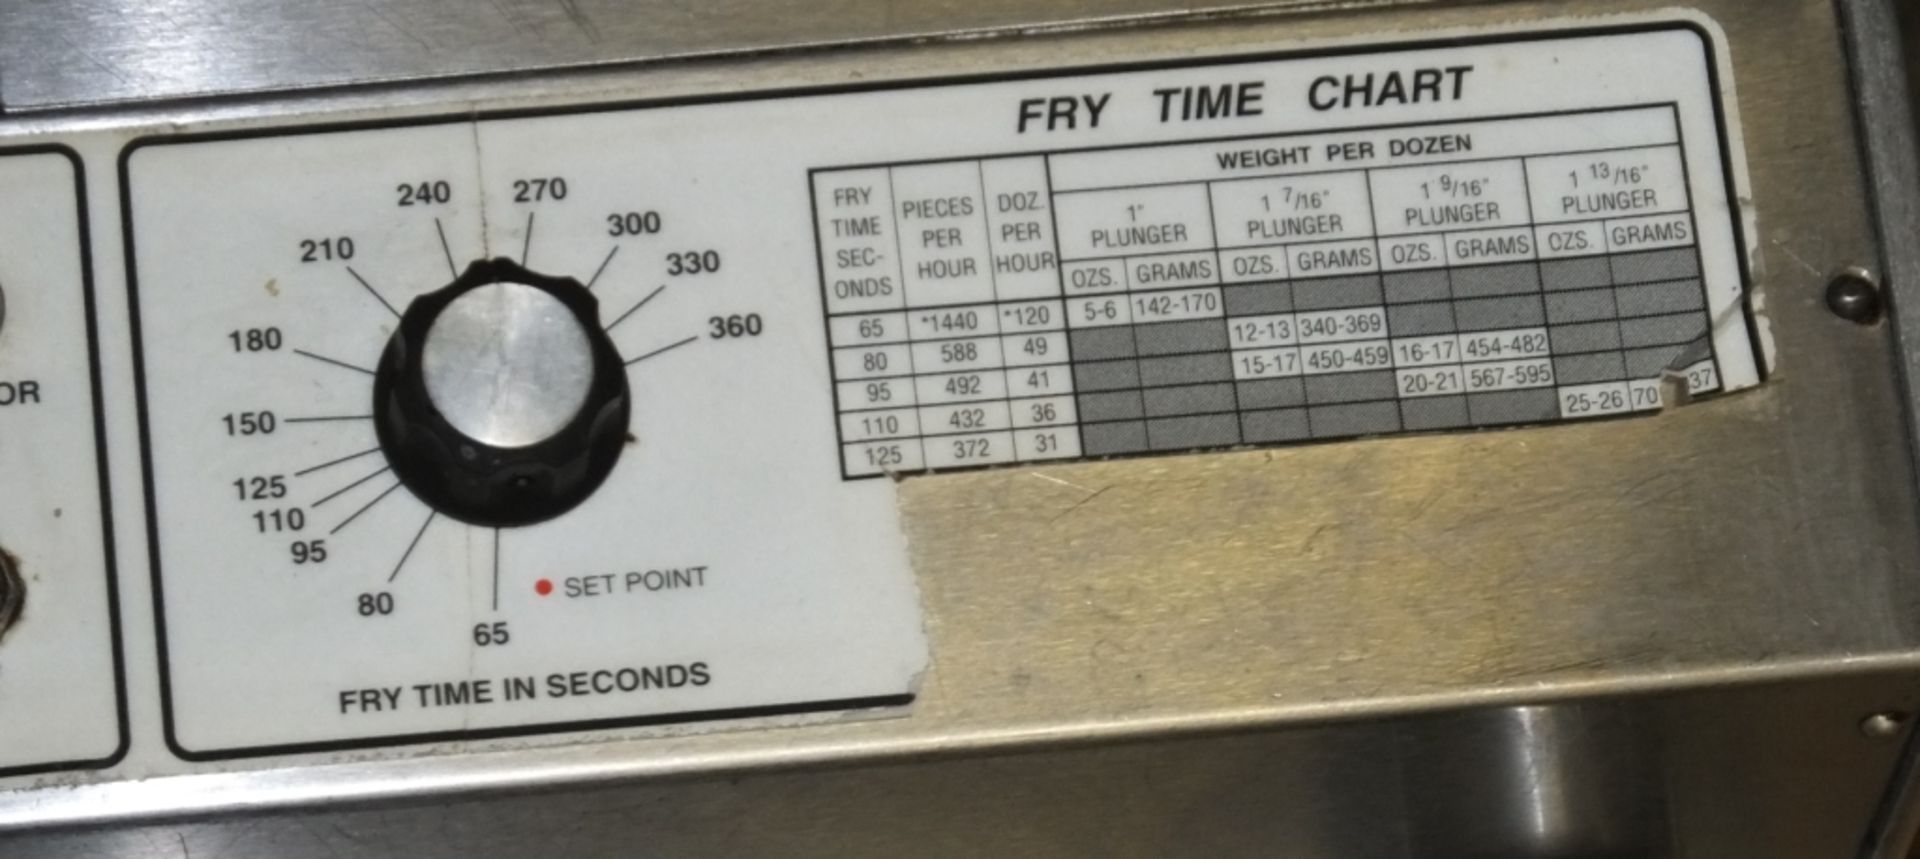 Conveyor Donut Frying Machine - Image 3 of 3